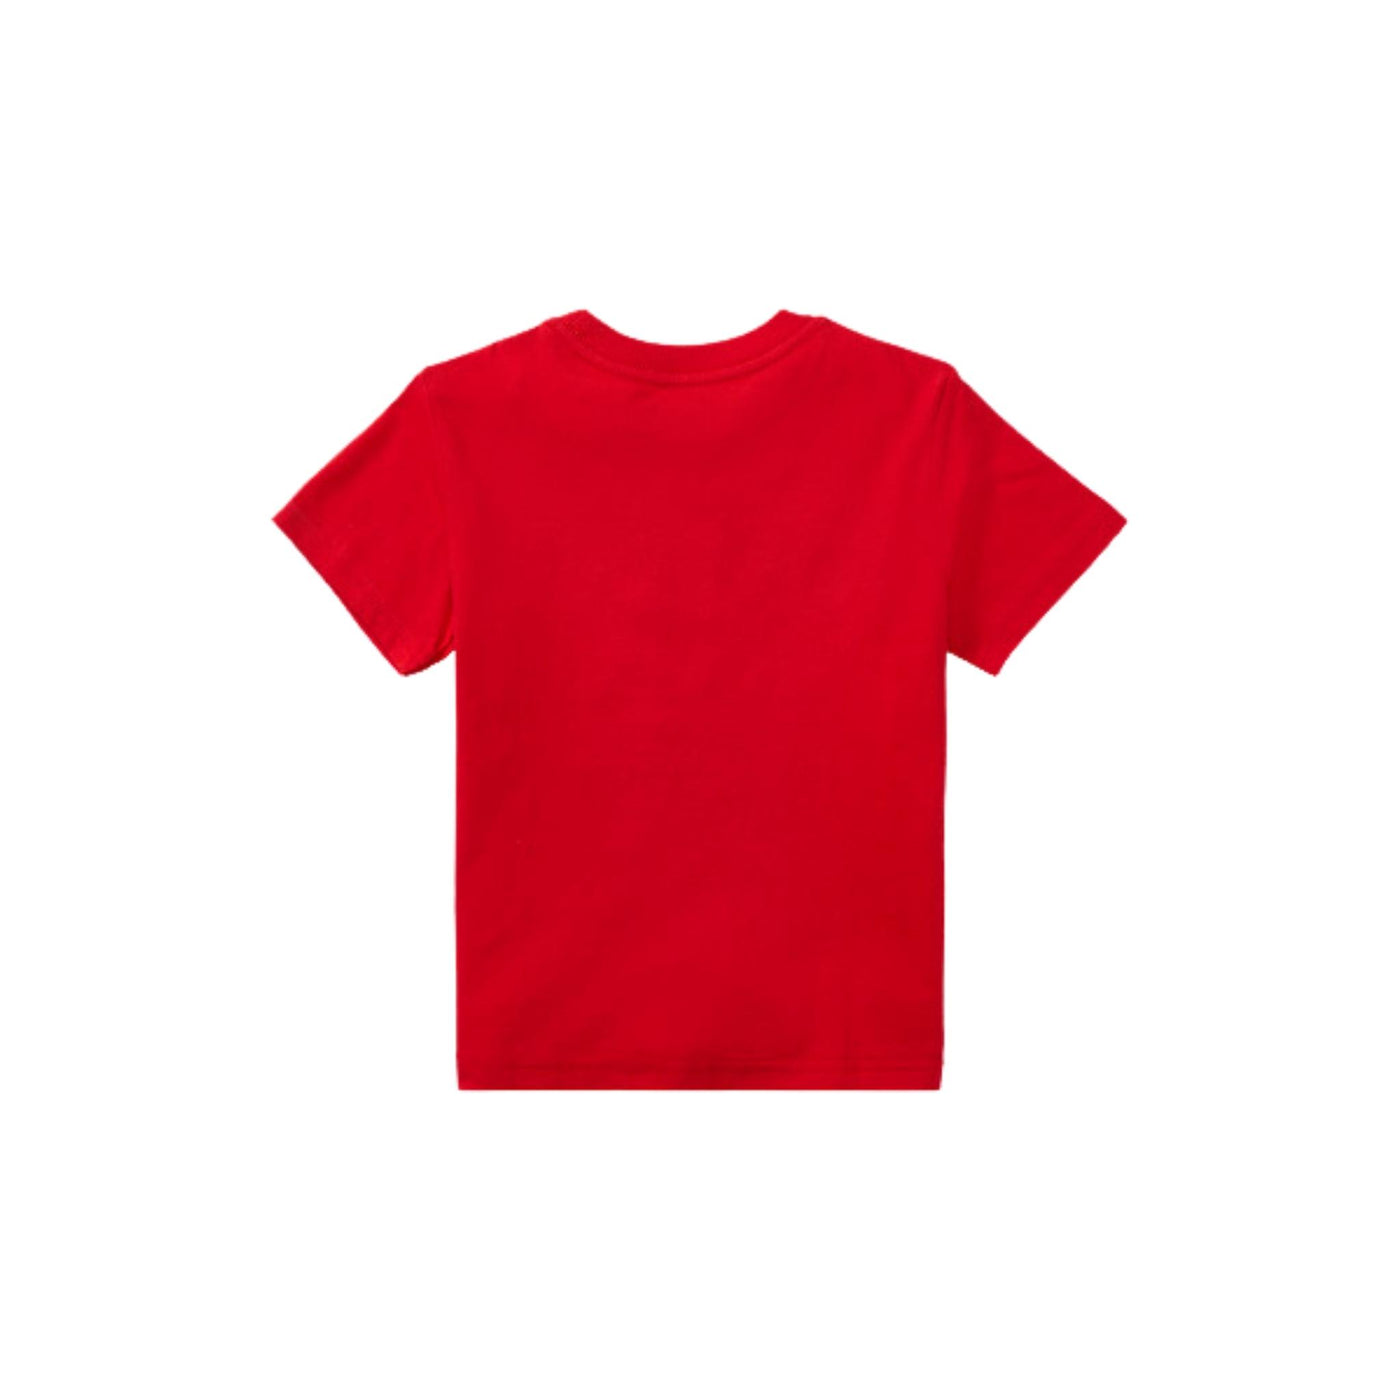 T-shirt Bambino in jersey di cotone con ricamo